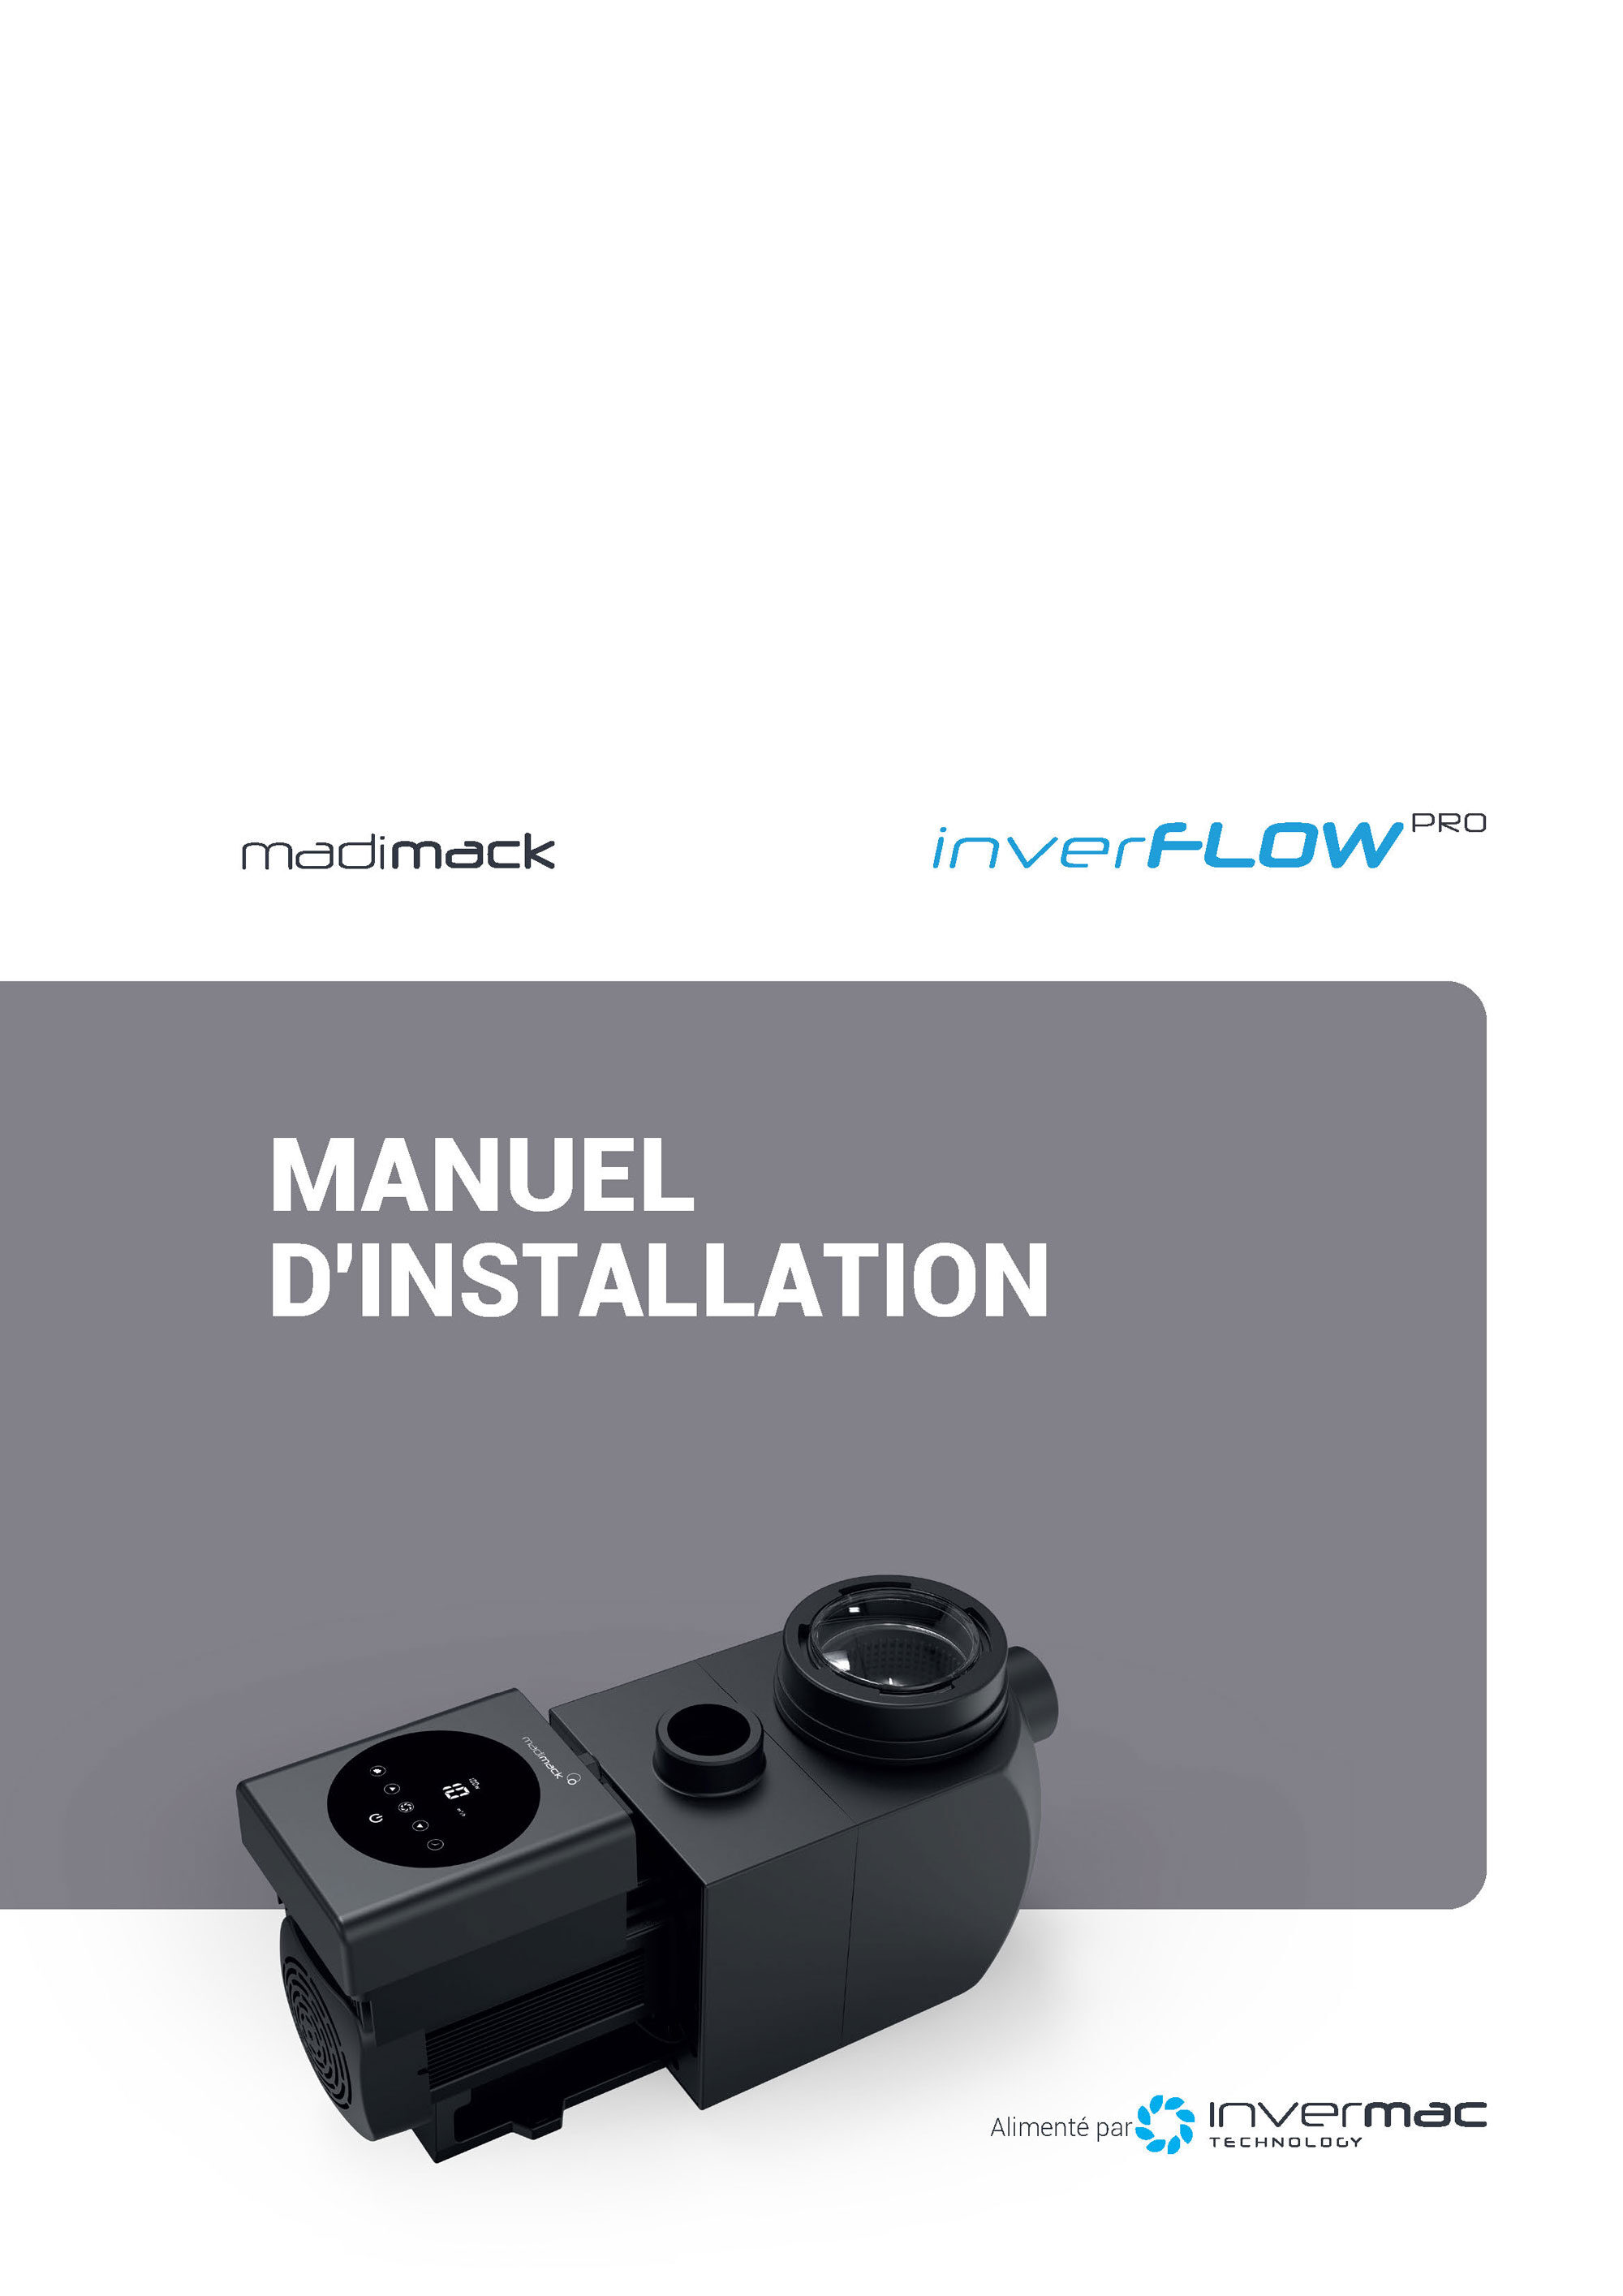 Madimack-InverFlow Pro-user-manual-CA-FR